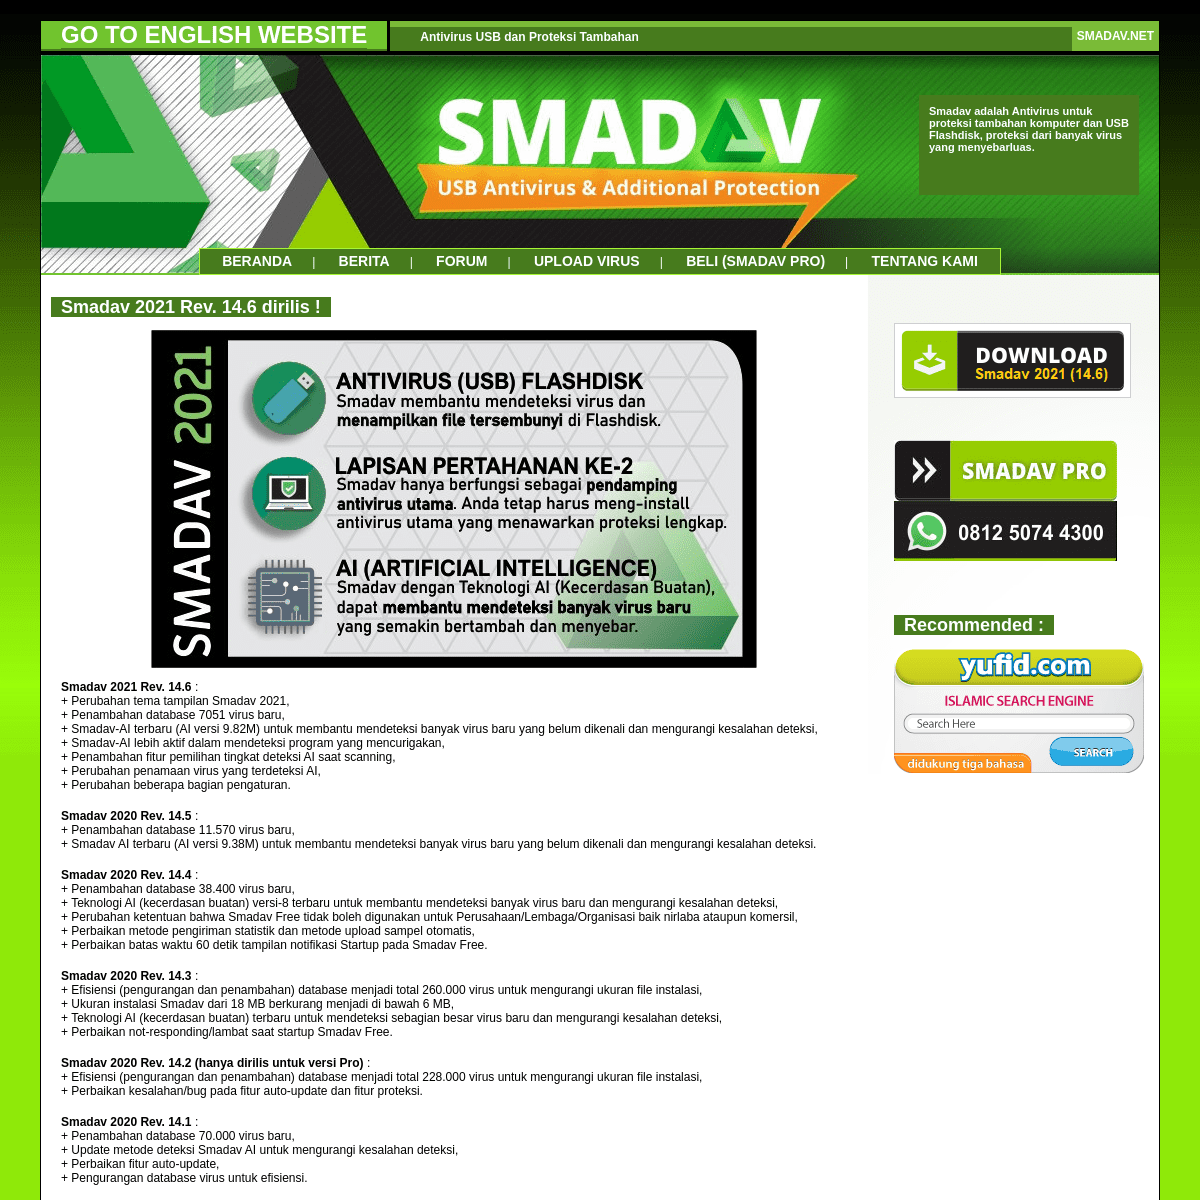 A complete backup of https://smadav.net